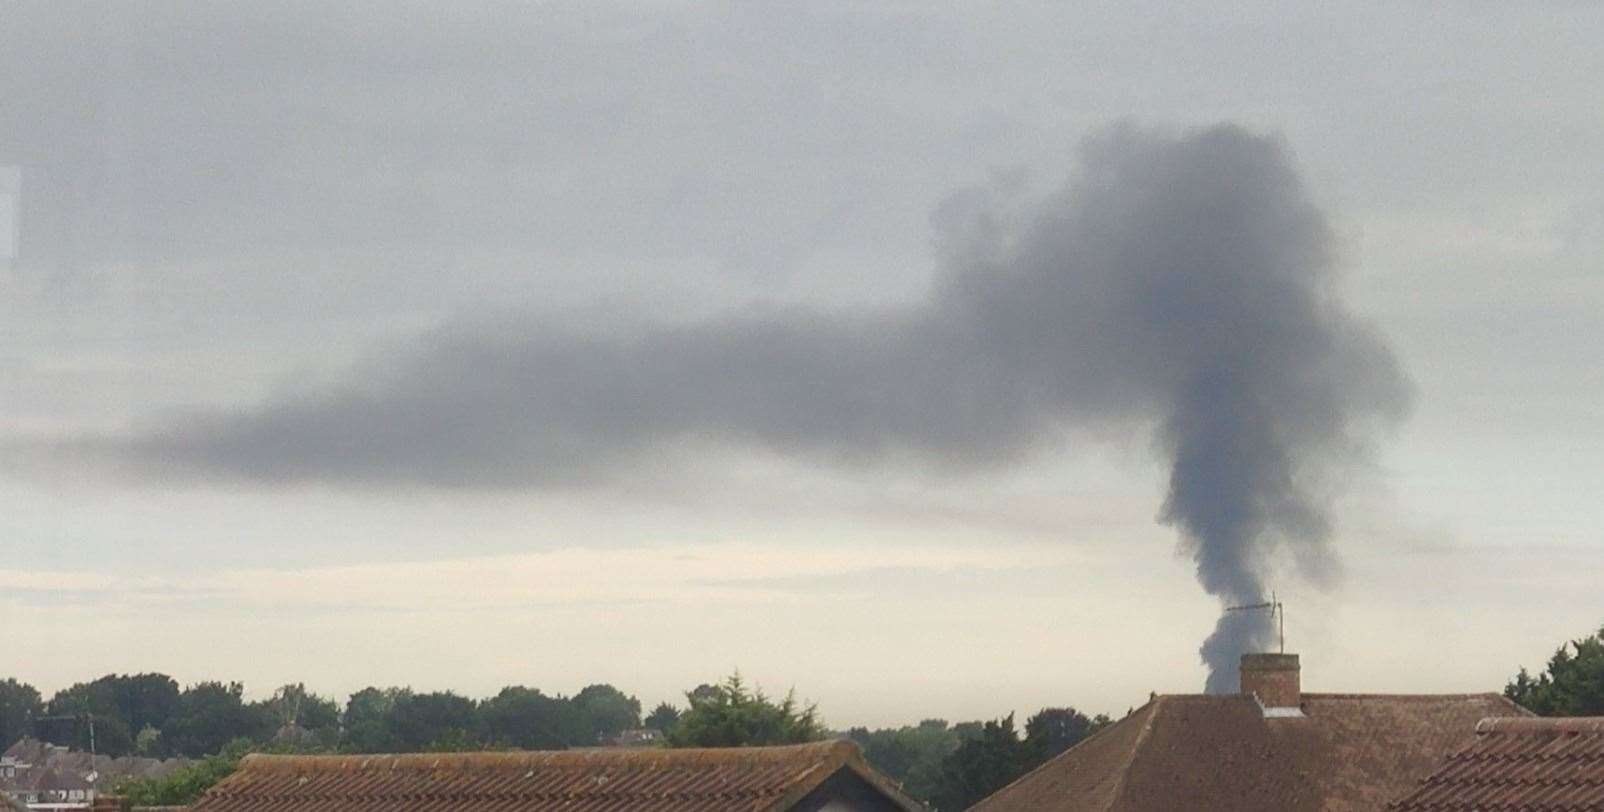 Smoke could be seen in nearby Swanley Photo: @keriwinkle82